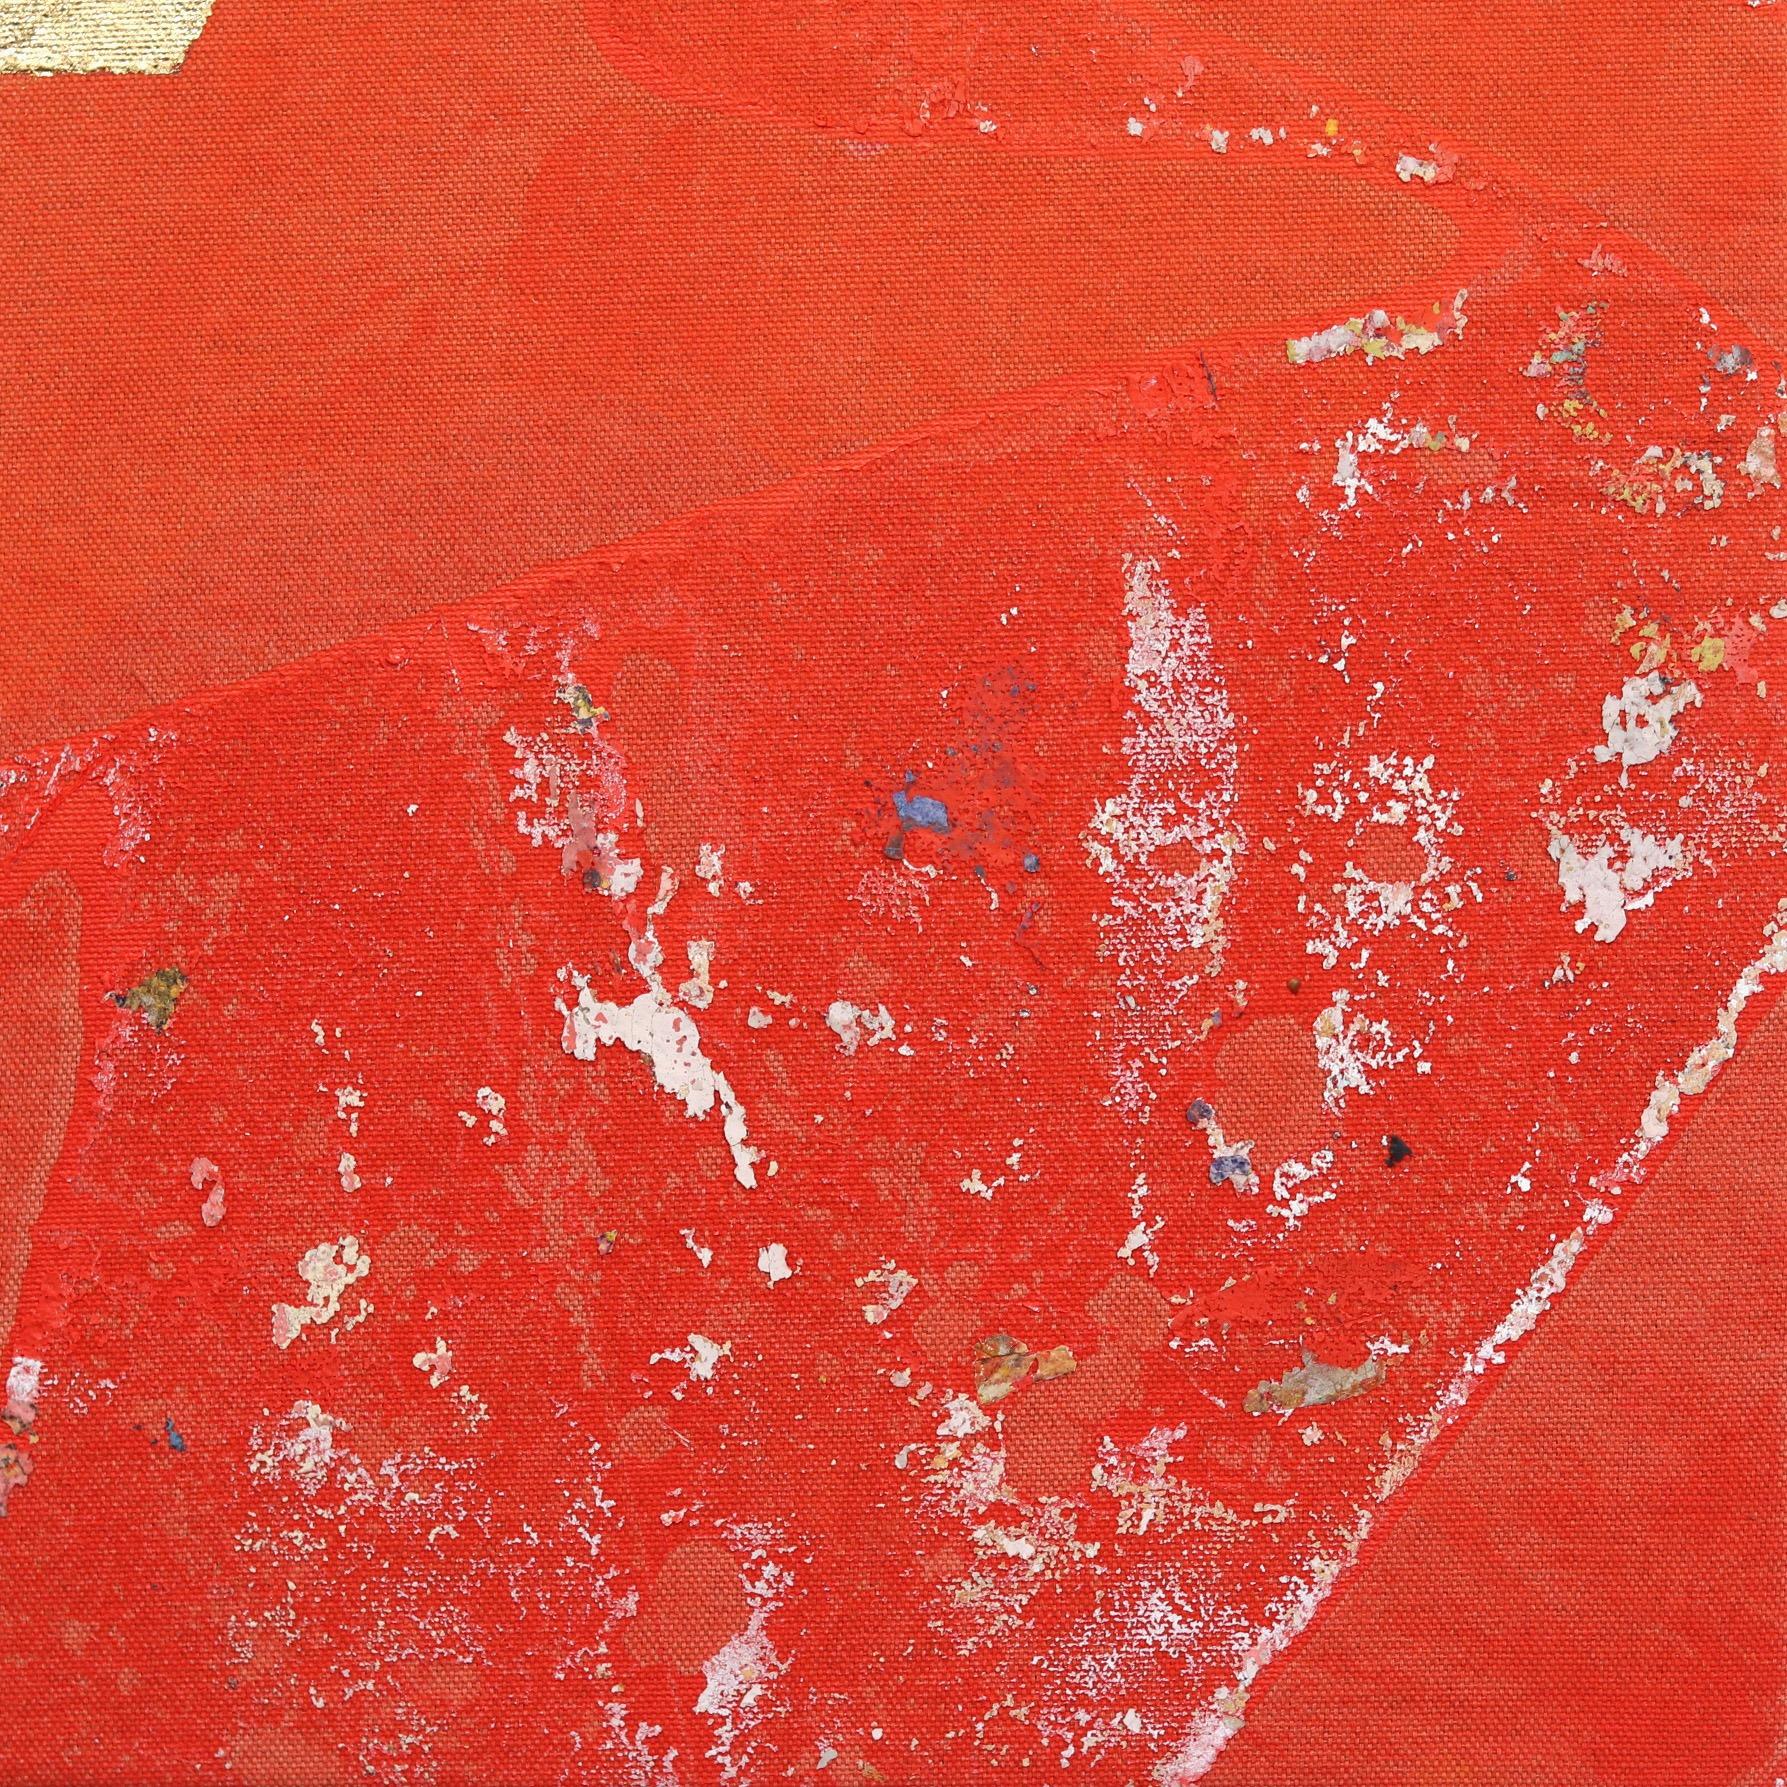 Concrete Sunset Mini I - Bold Meditative Gold Leaf Painting on Linen Canvas For Sale 4